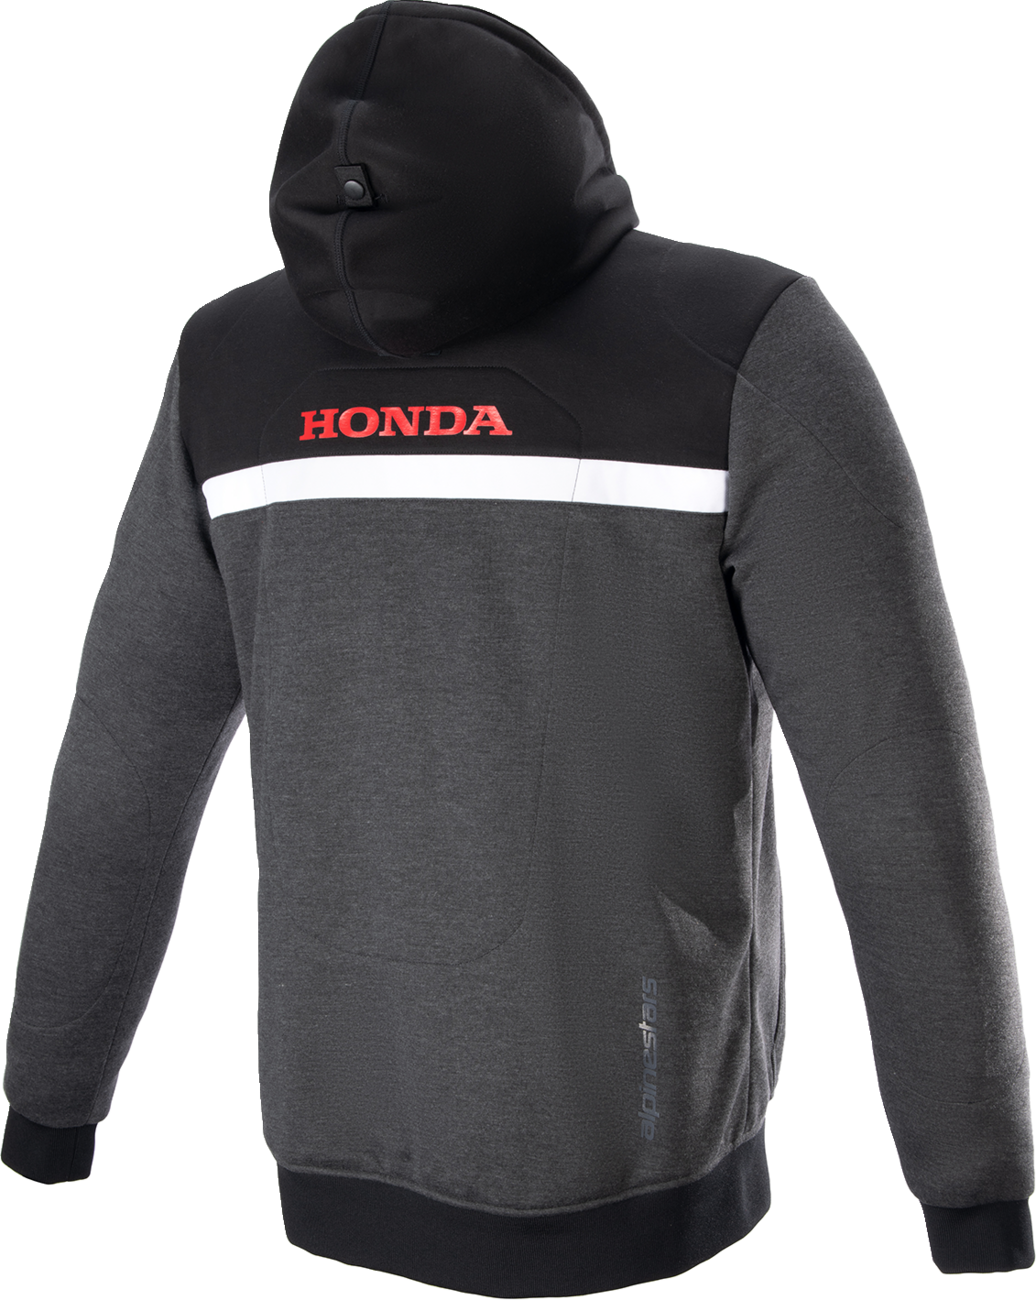 ALPINESTARS Honda Chrome Street Hoodie - Black/Gray/Red - 2XL 4201323-1908-2X